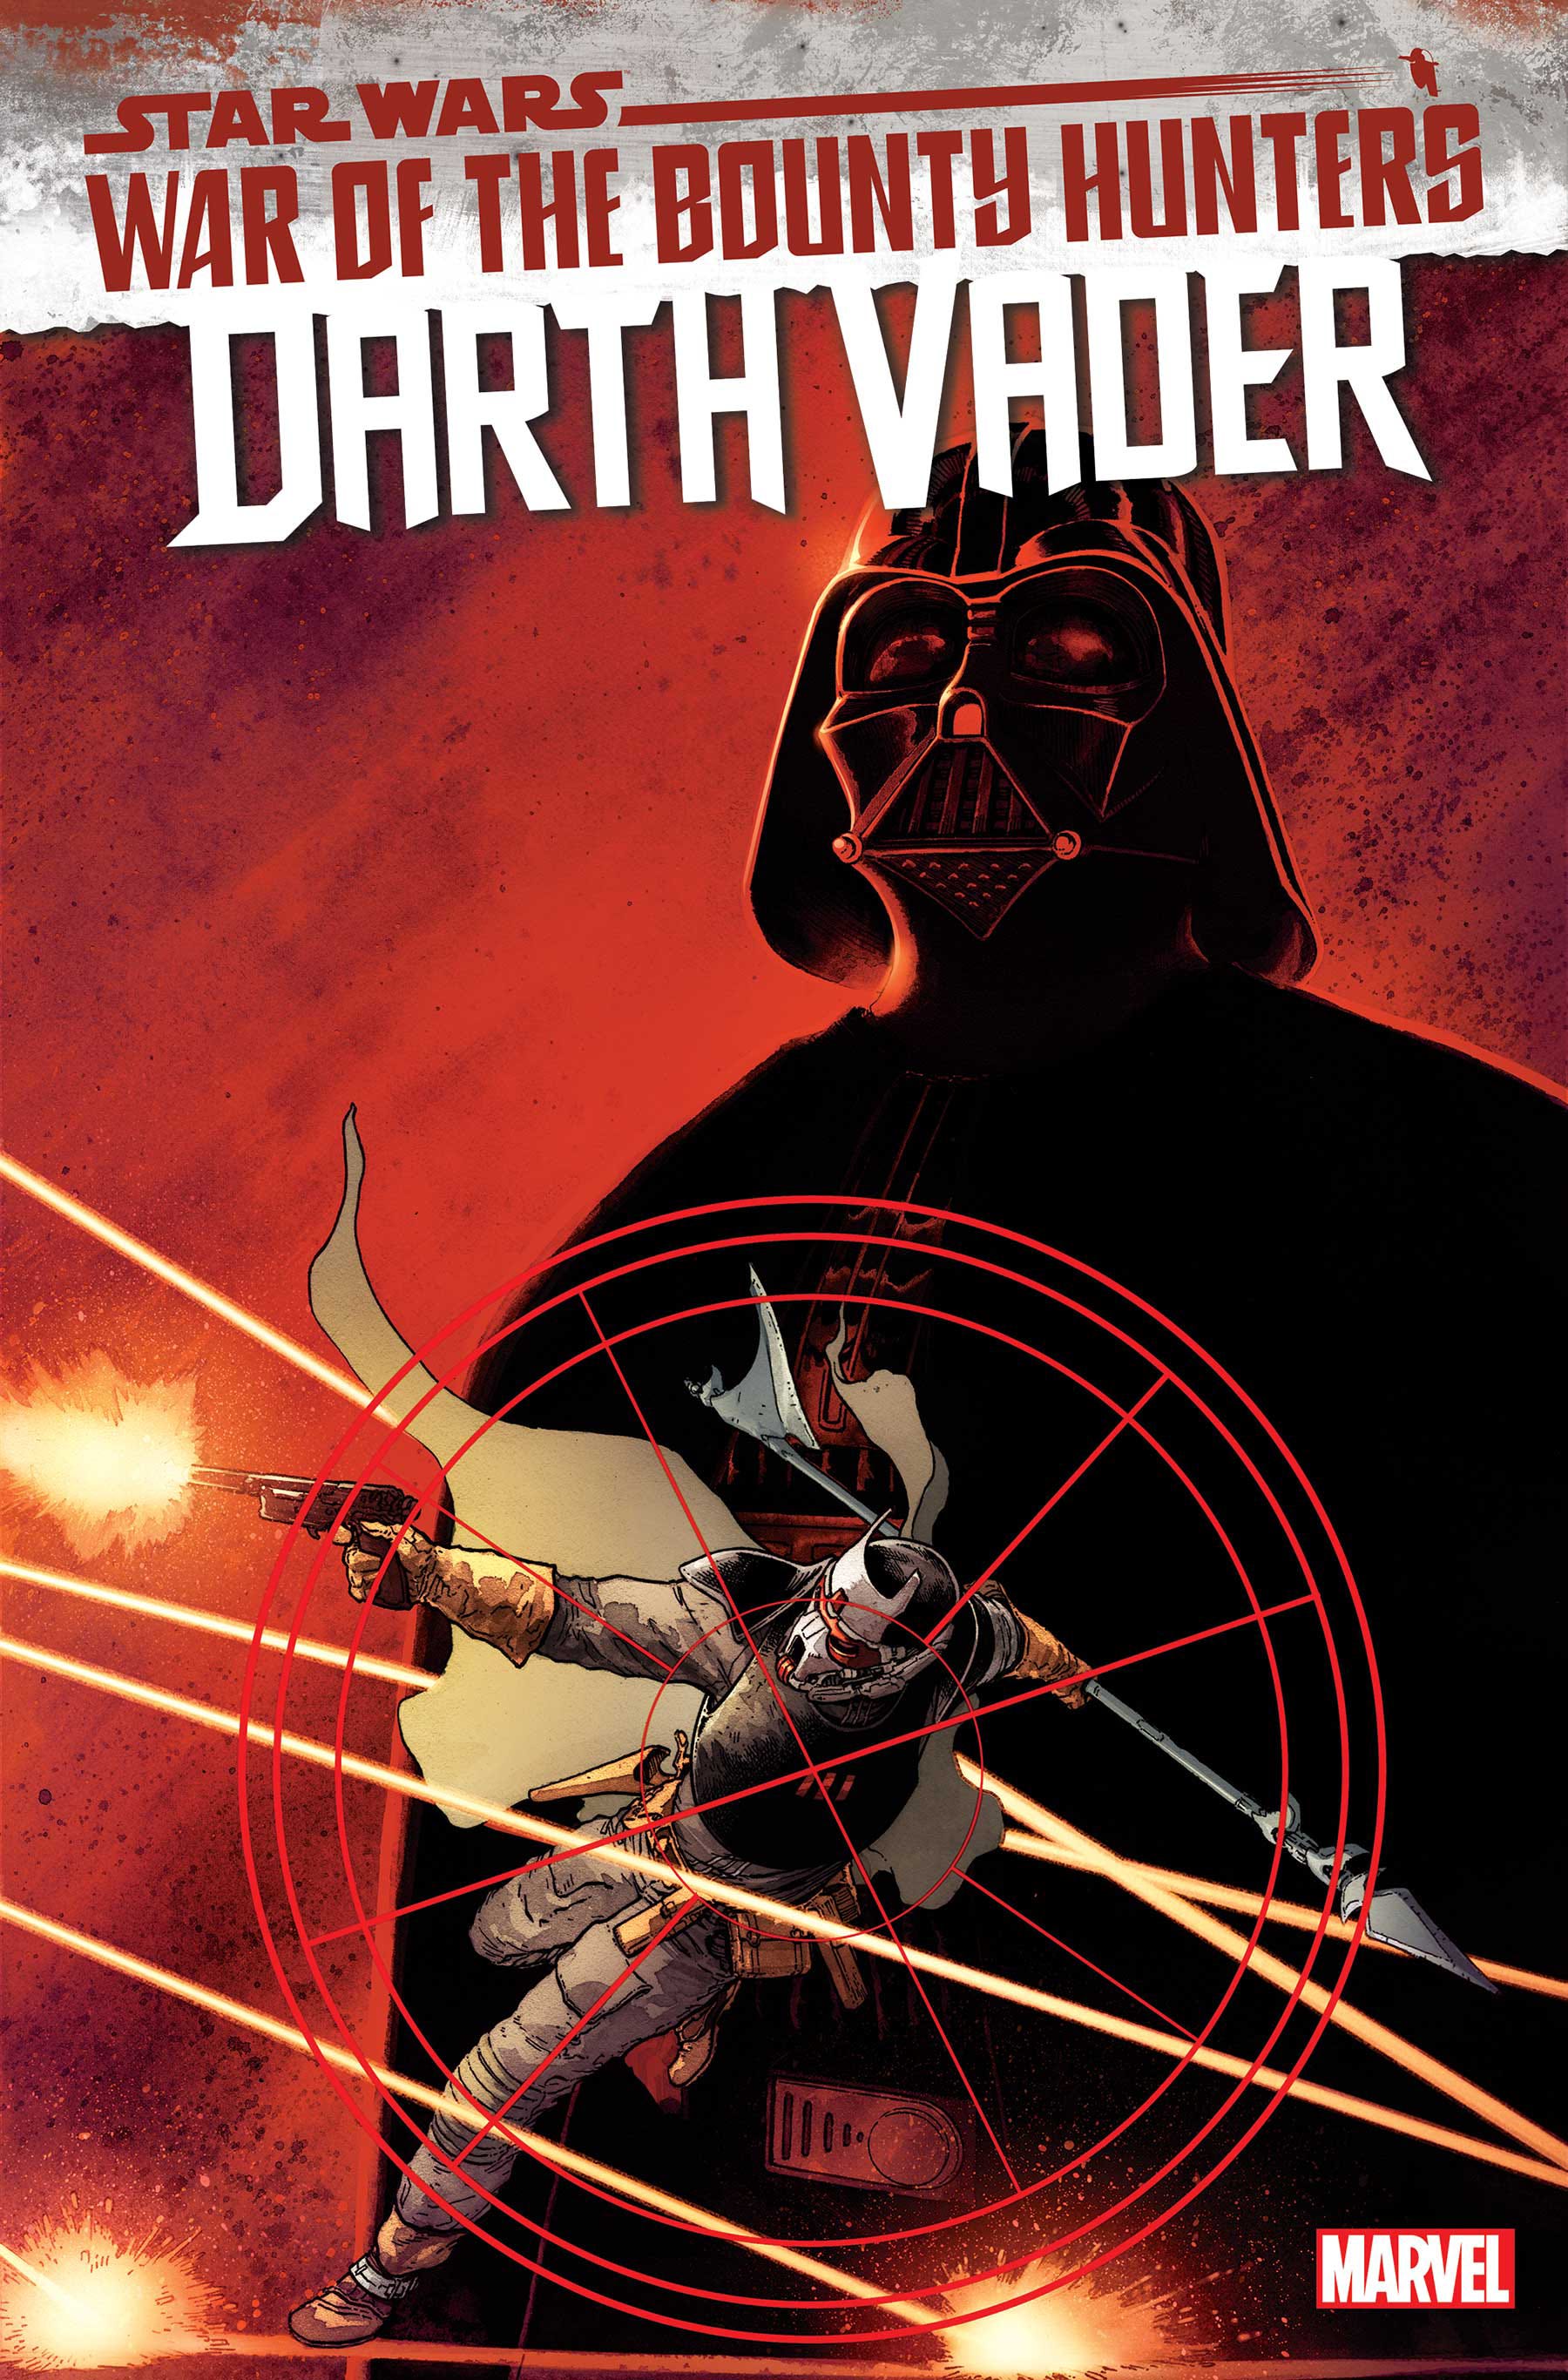 Star Wars Darth Vader #15 (War of the Bounty Hunters)